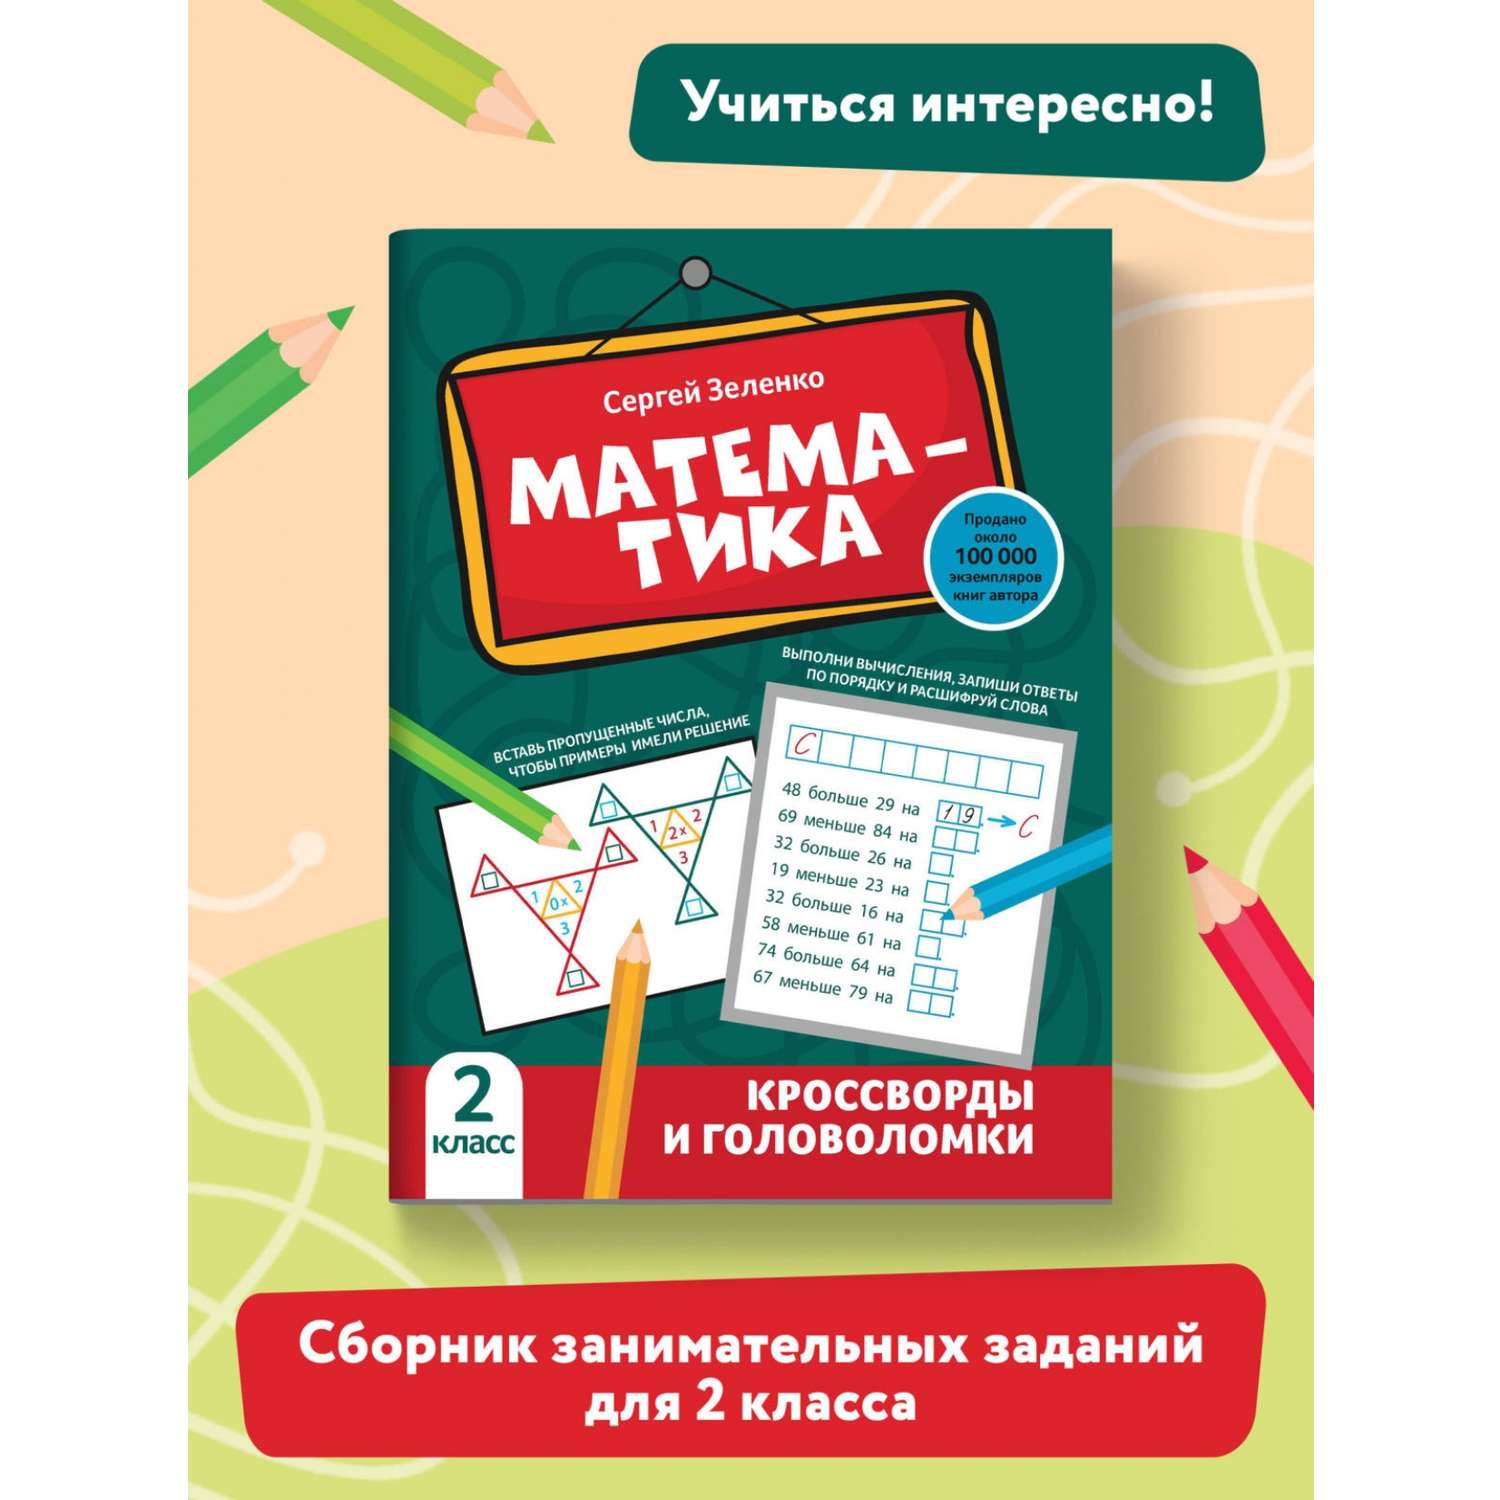 Книга Феникс Математика: кроссворды и головоломки: 2 класс - фото 2